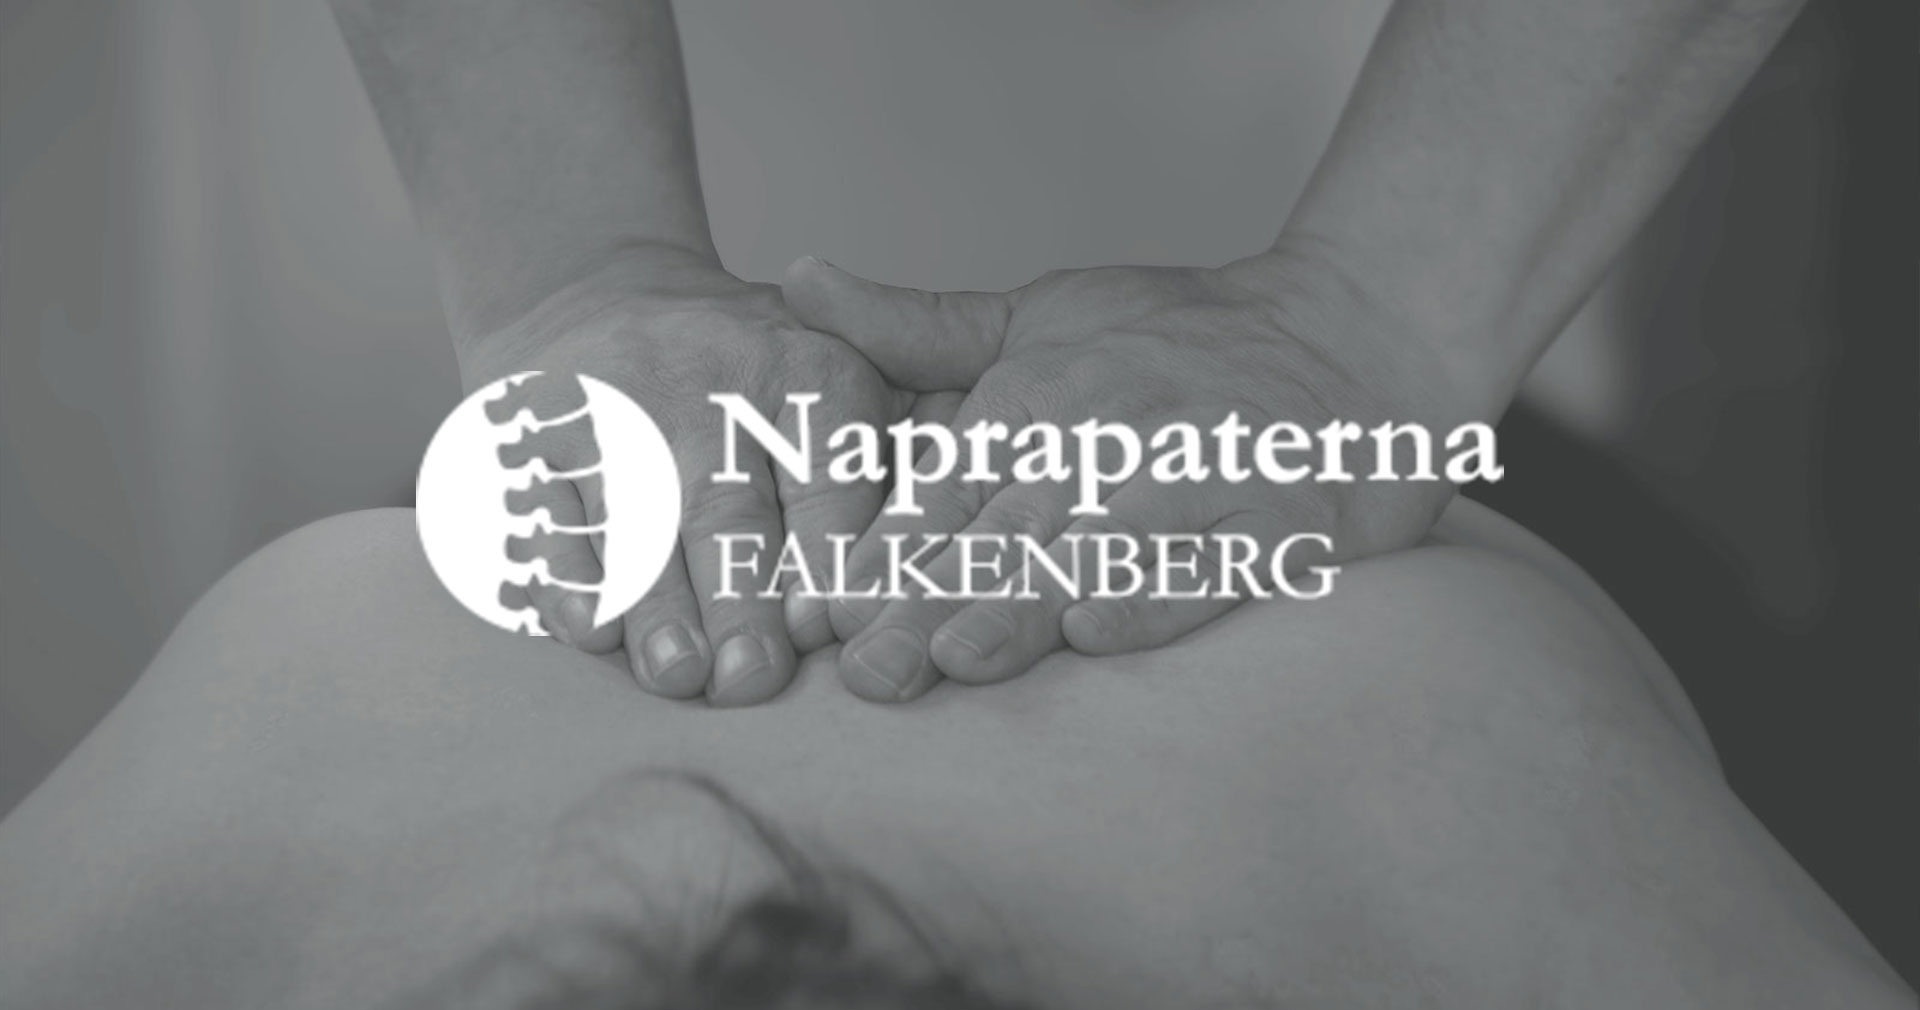 Naptrapaterna Falkenberg